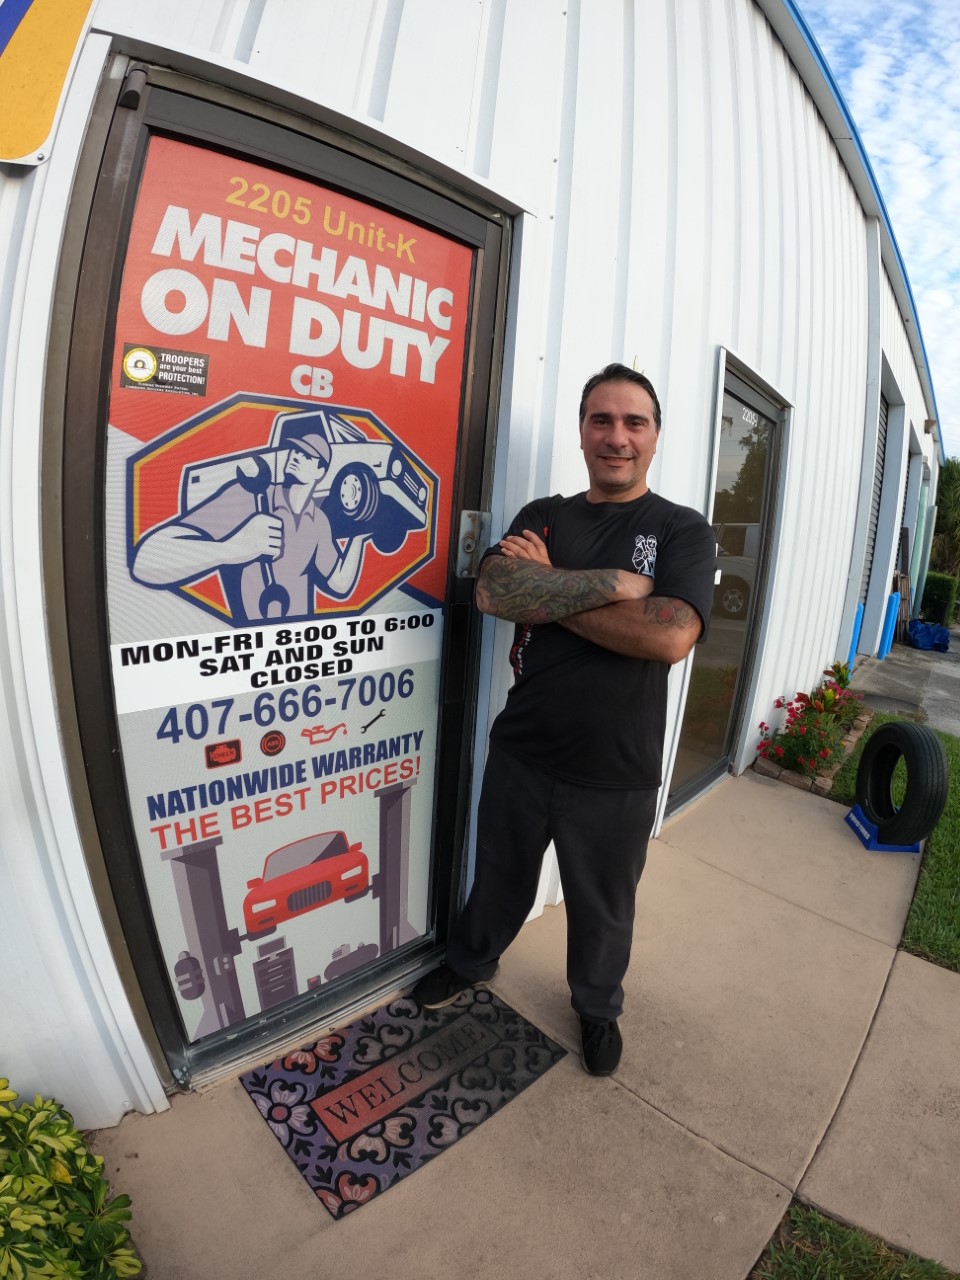 Mechanic - Mechanic On Duty CB LLC image 3